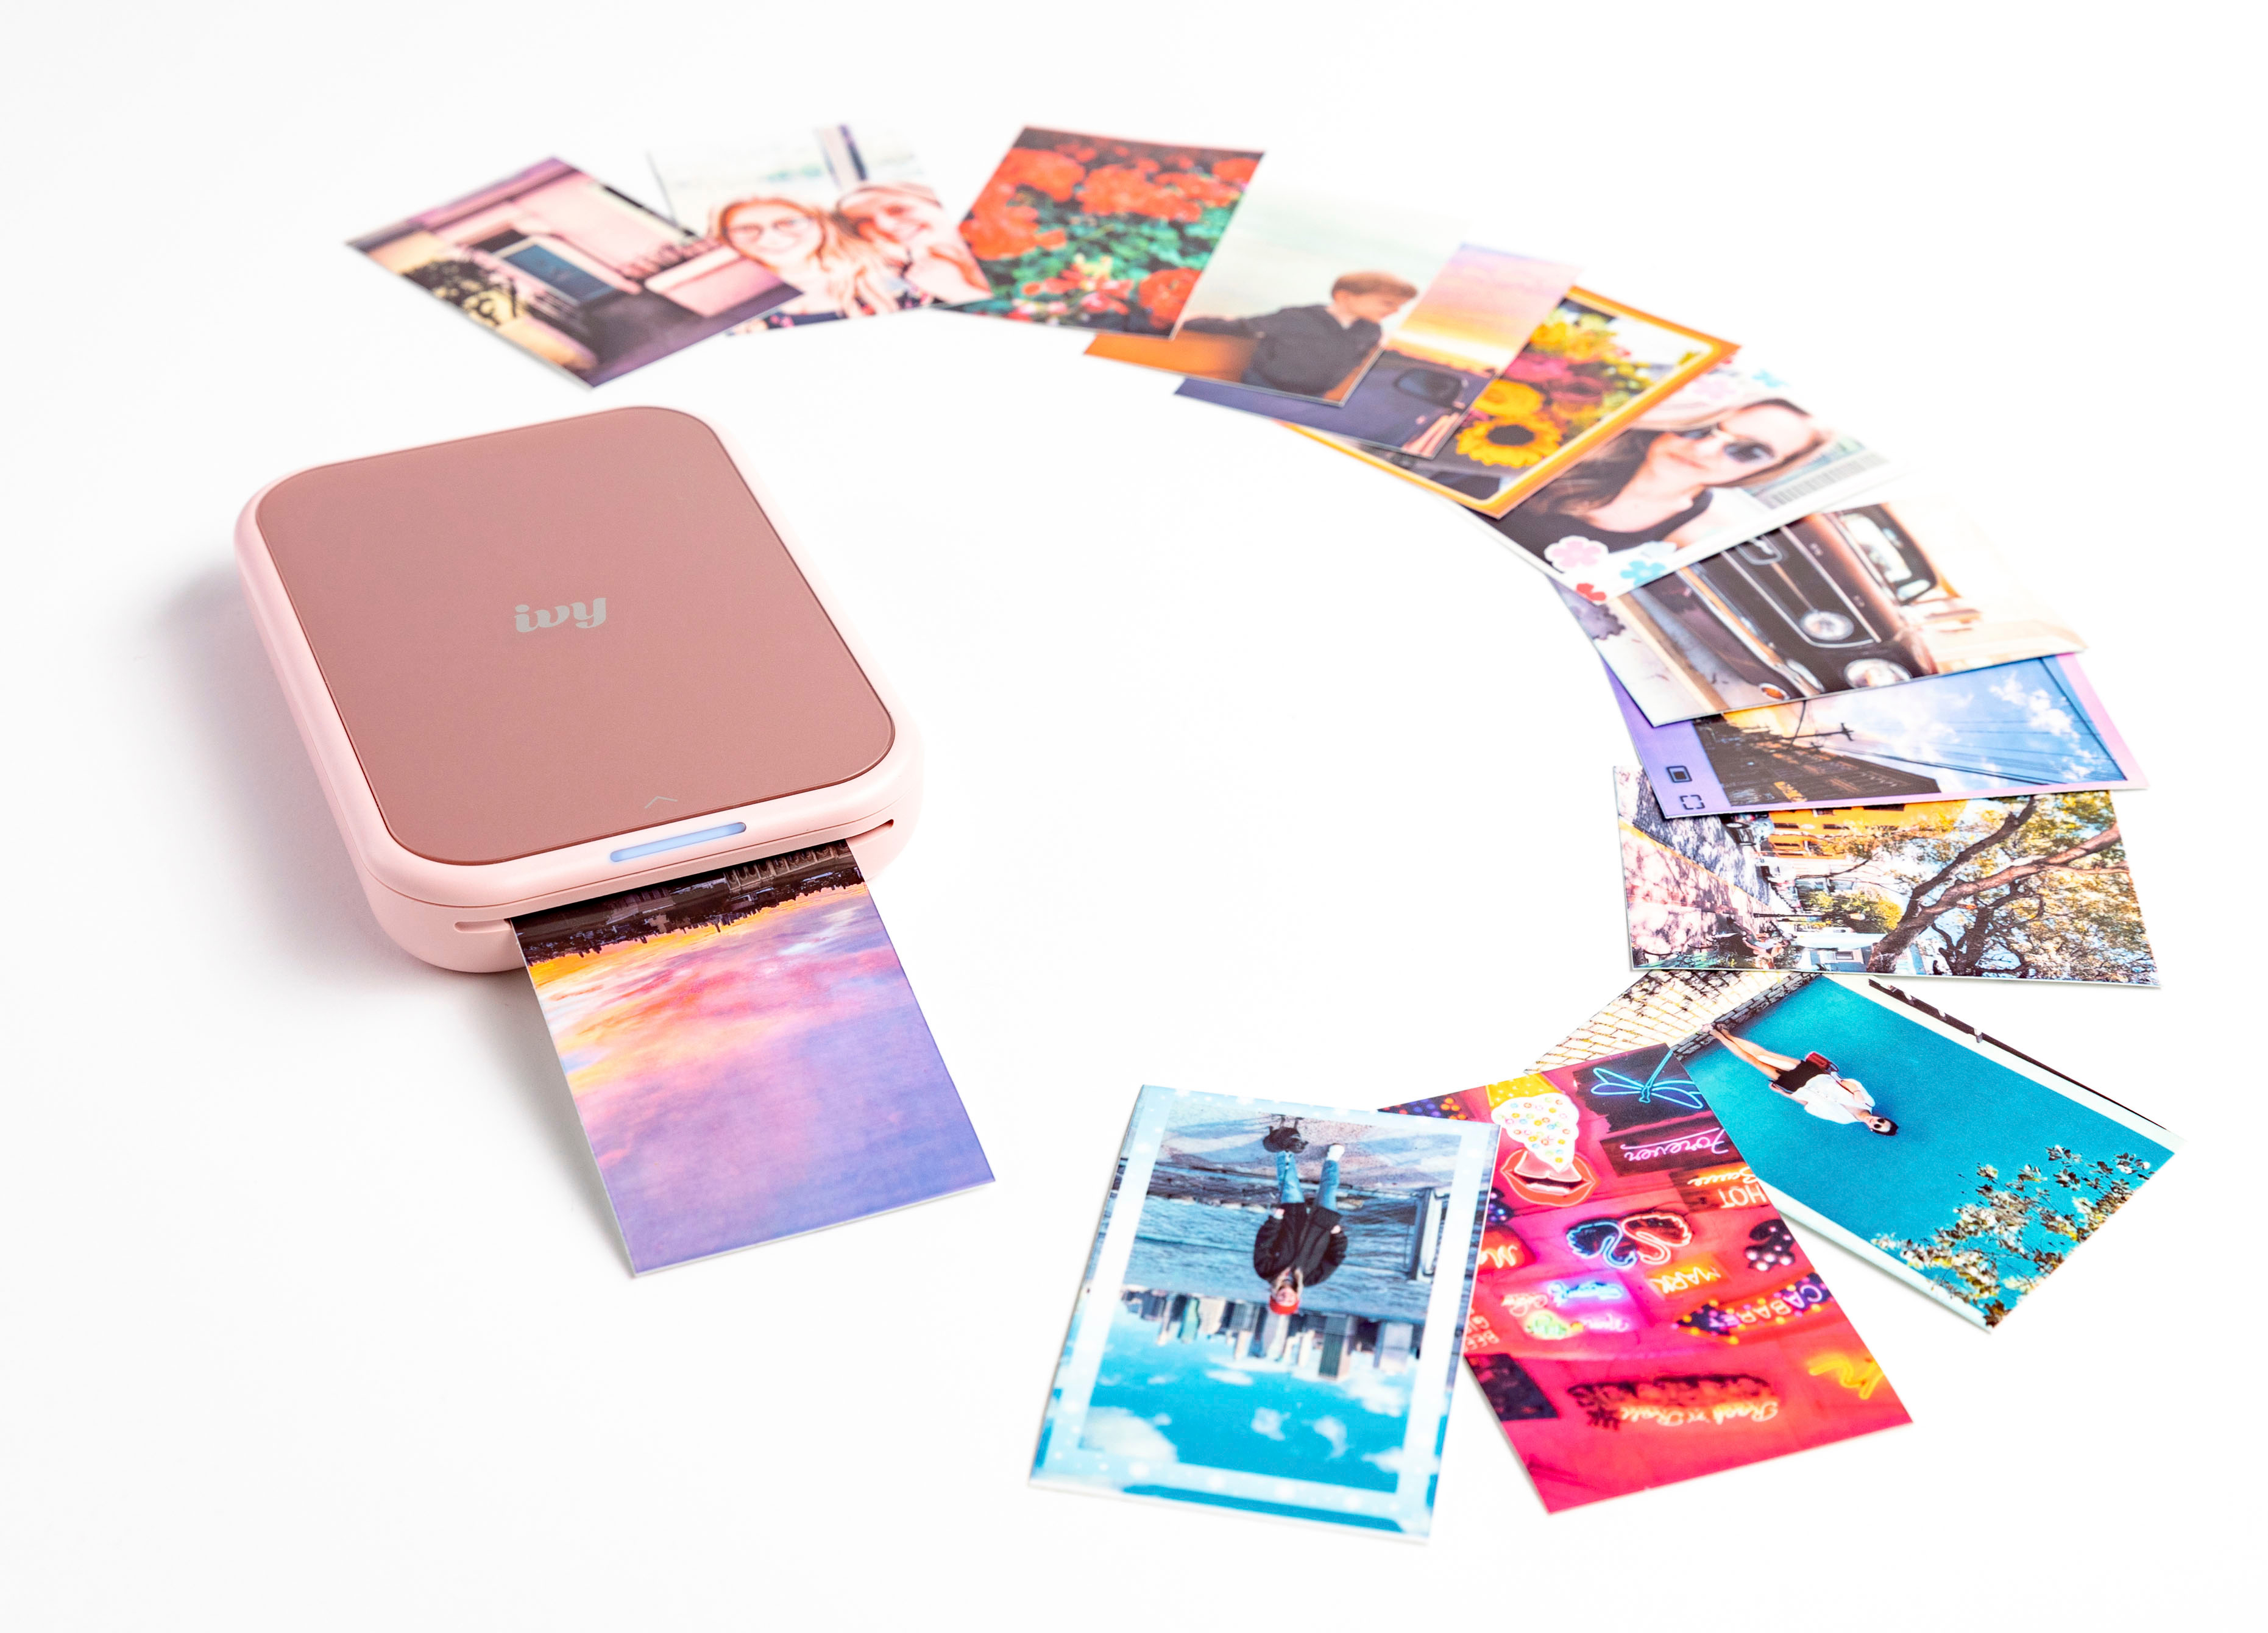 Canon IVY 2 Mini Photo Printer Blush Pink 5452C017 - Best Buy